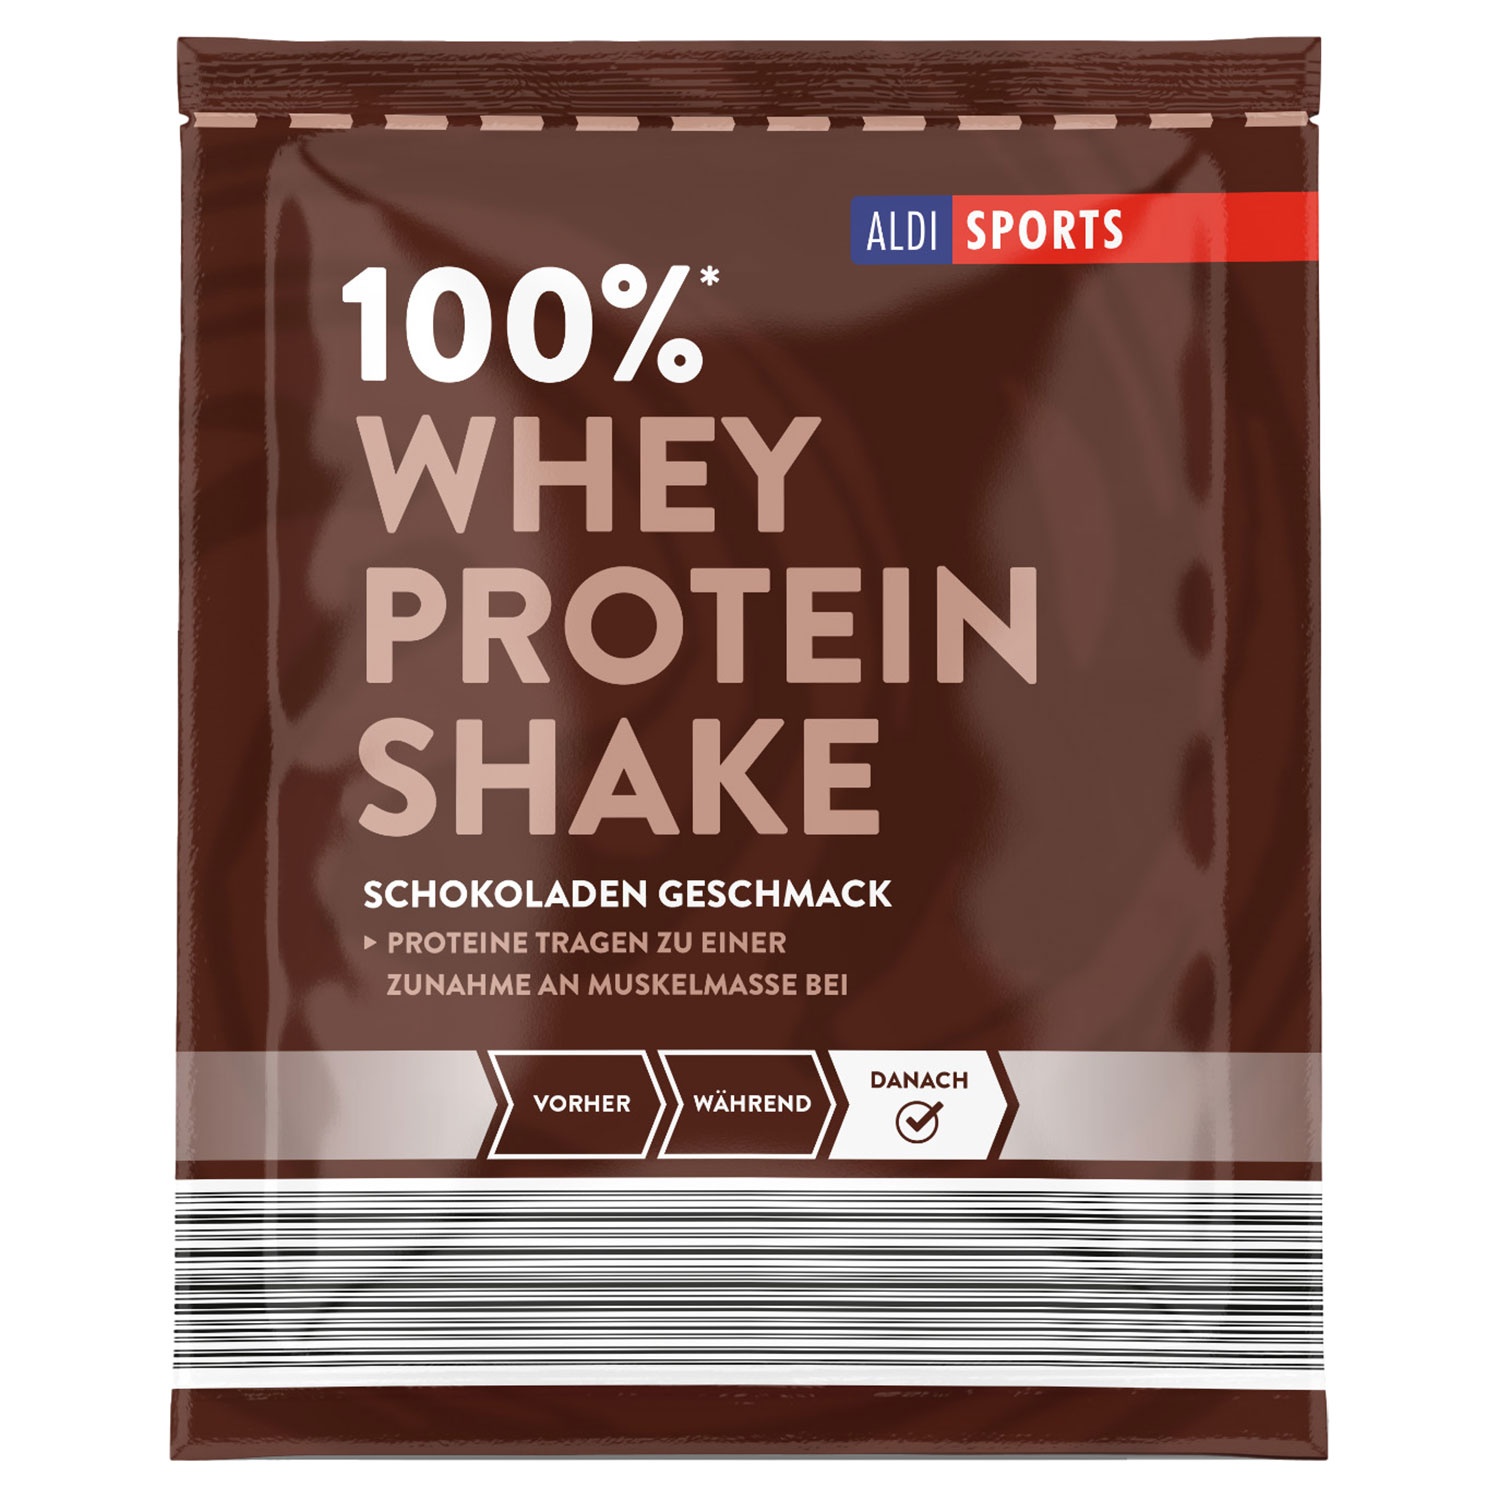 ALDI SPORTS Whey-Protein-Shake 30 g